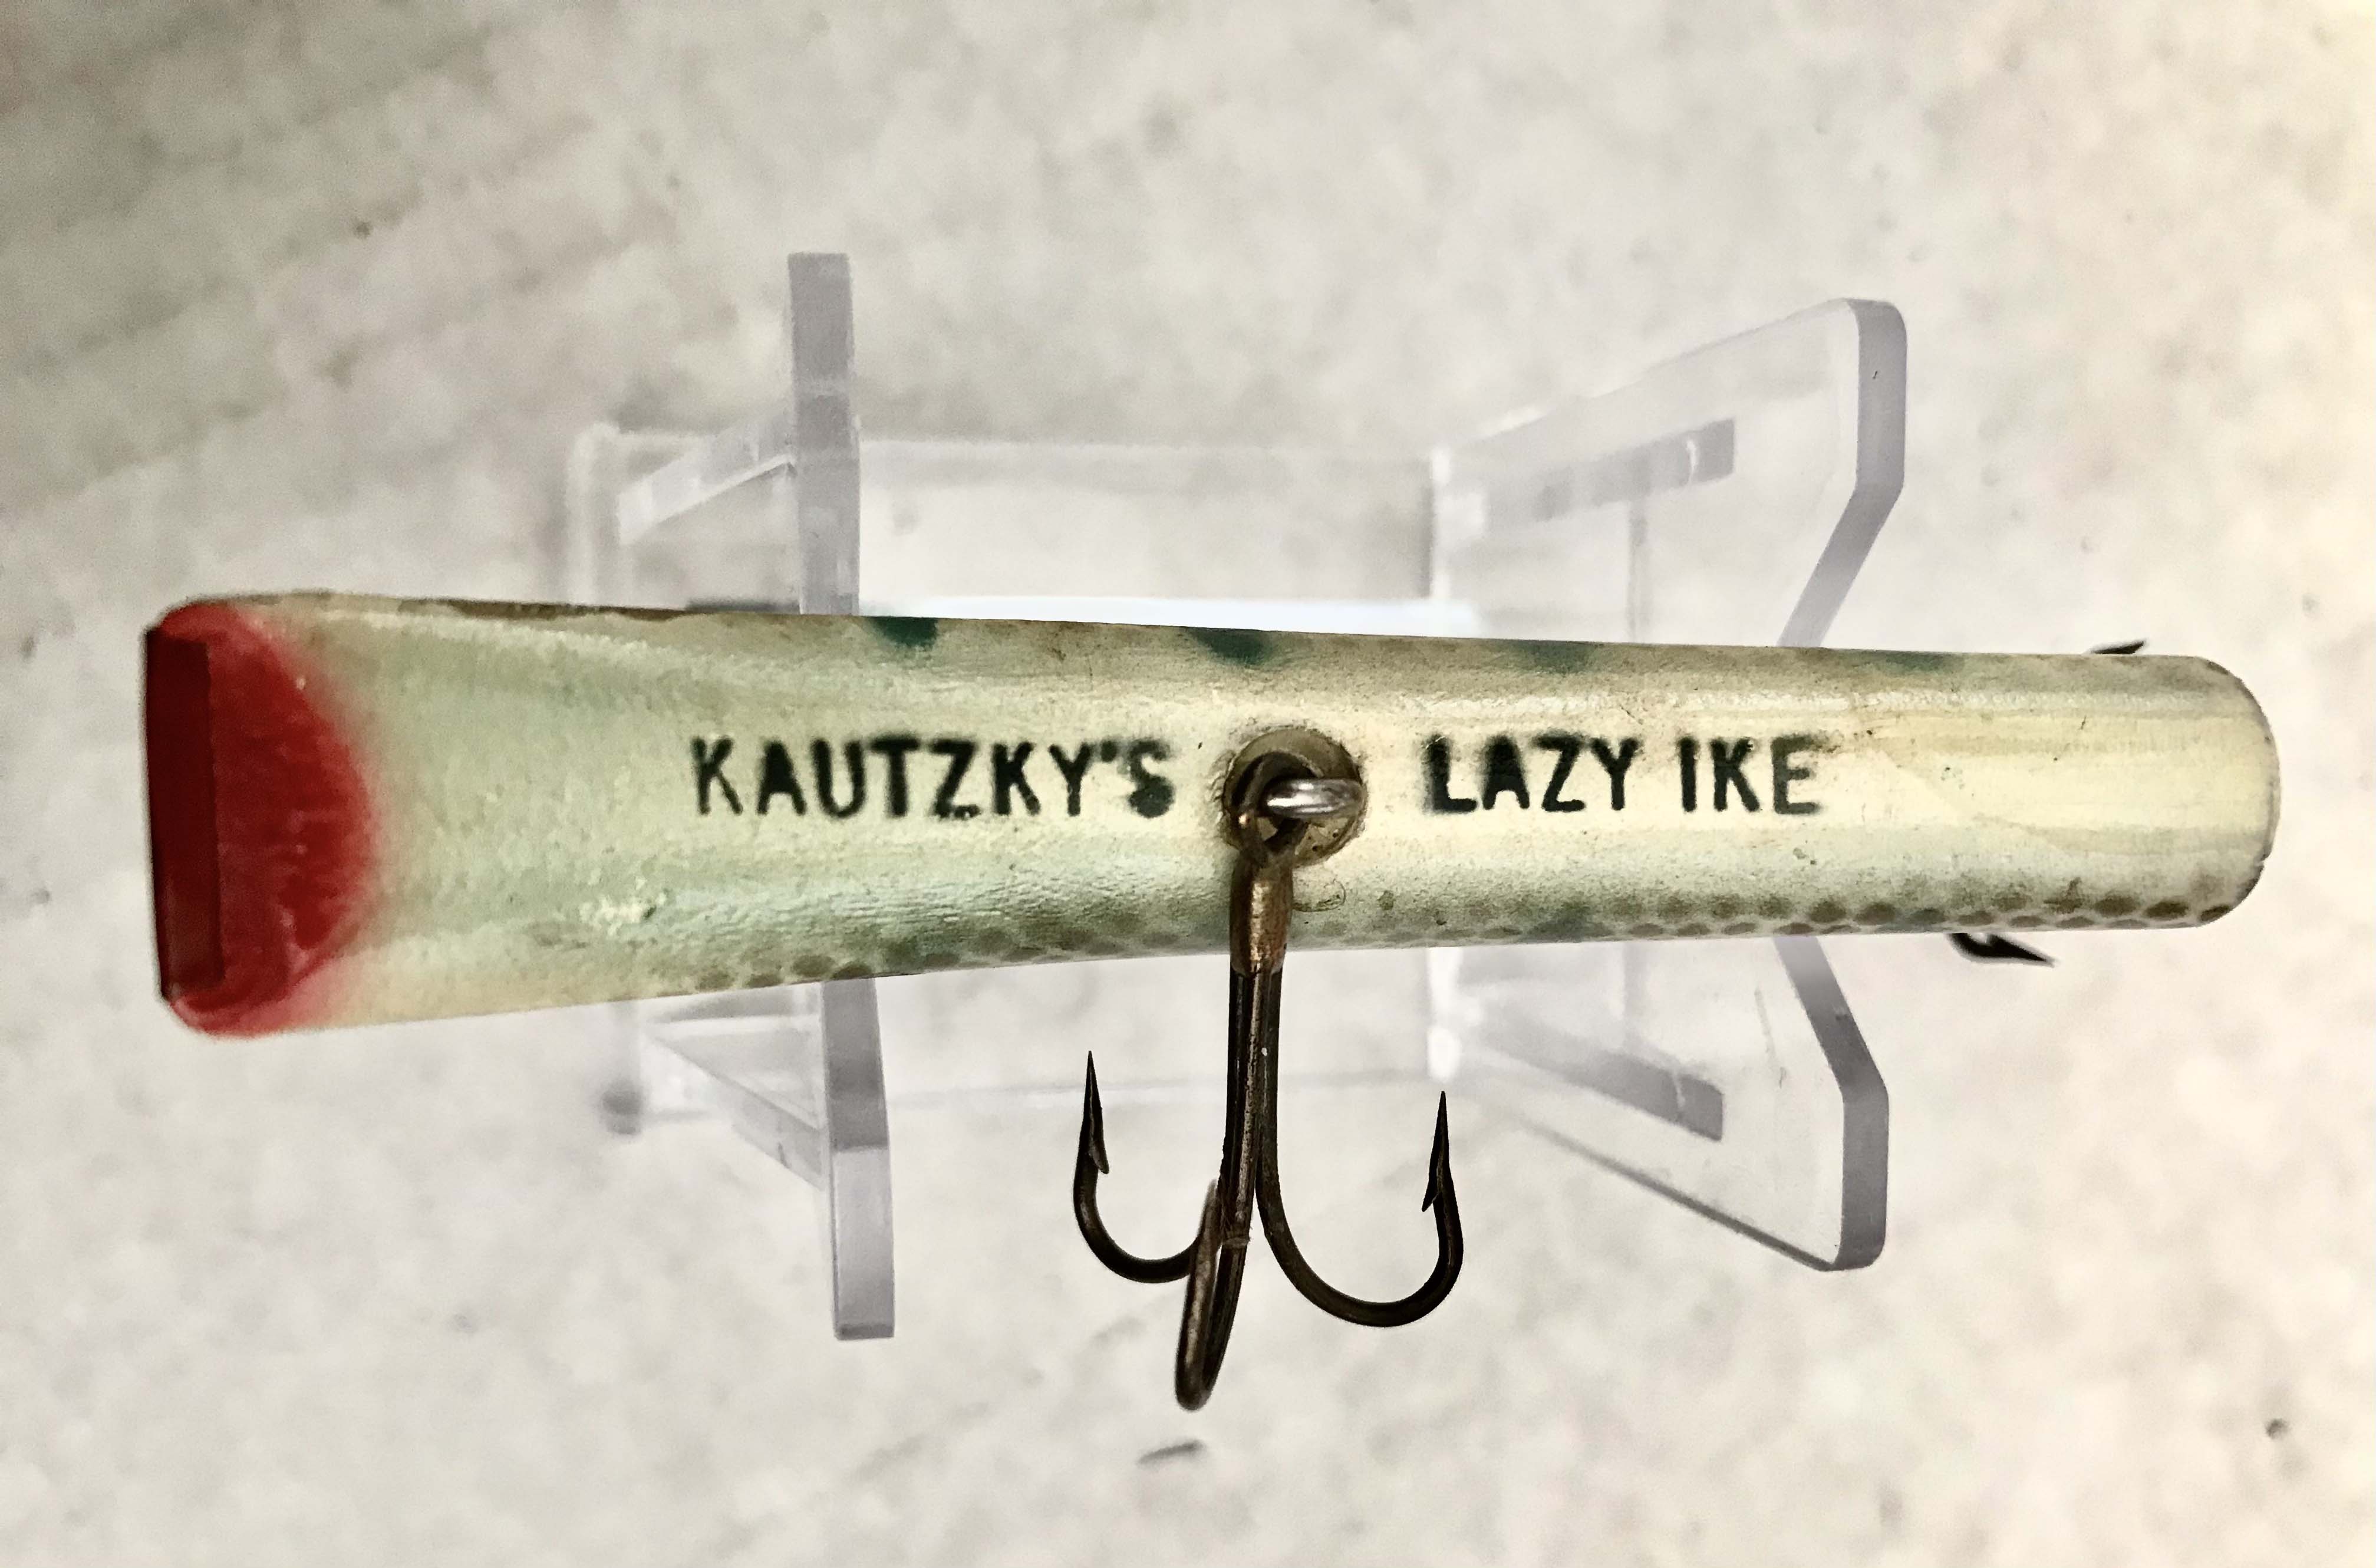 Two(2) mint “Original” Lazy Ike favorites/boxes